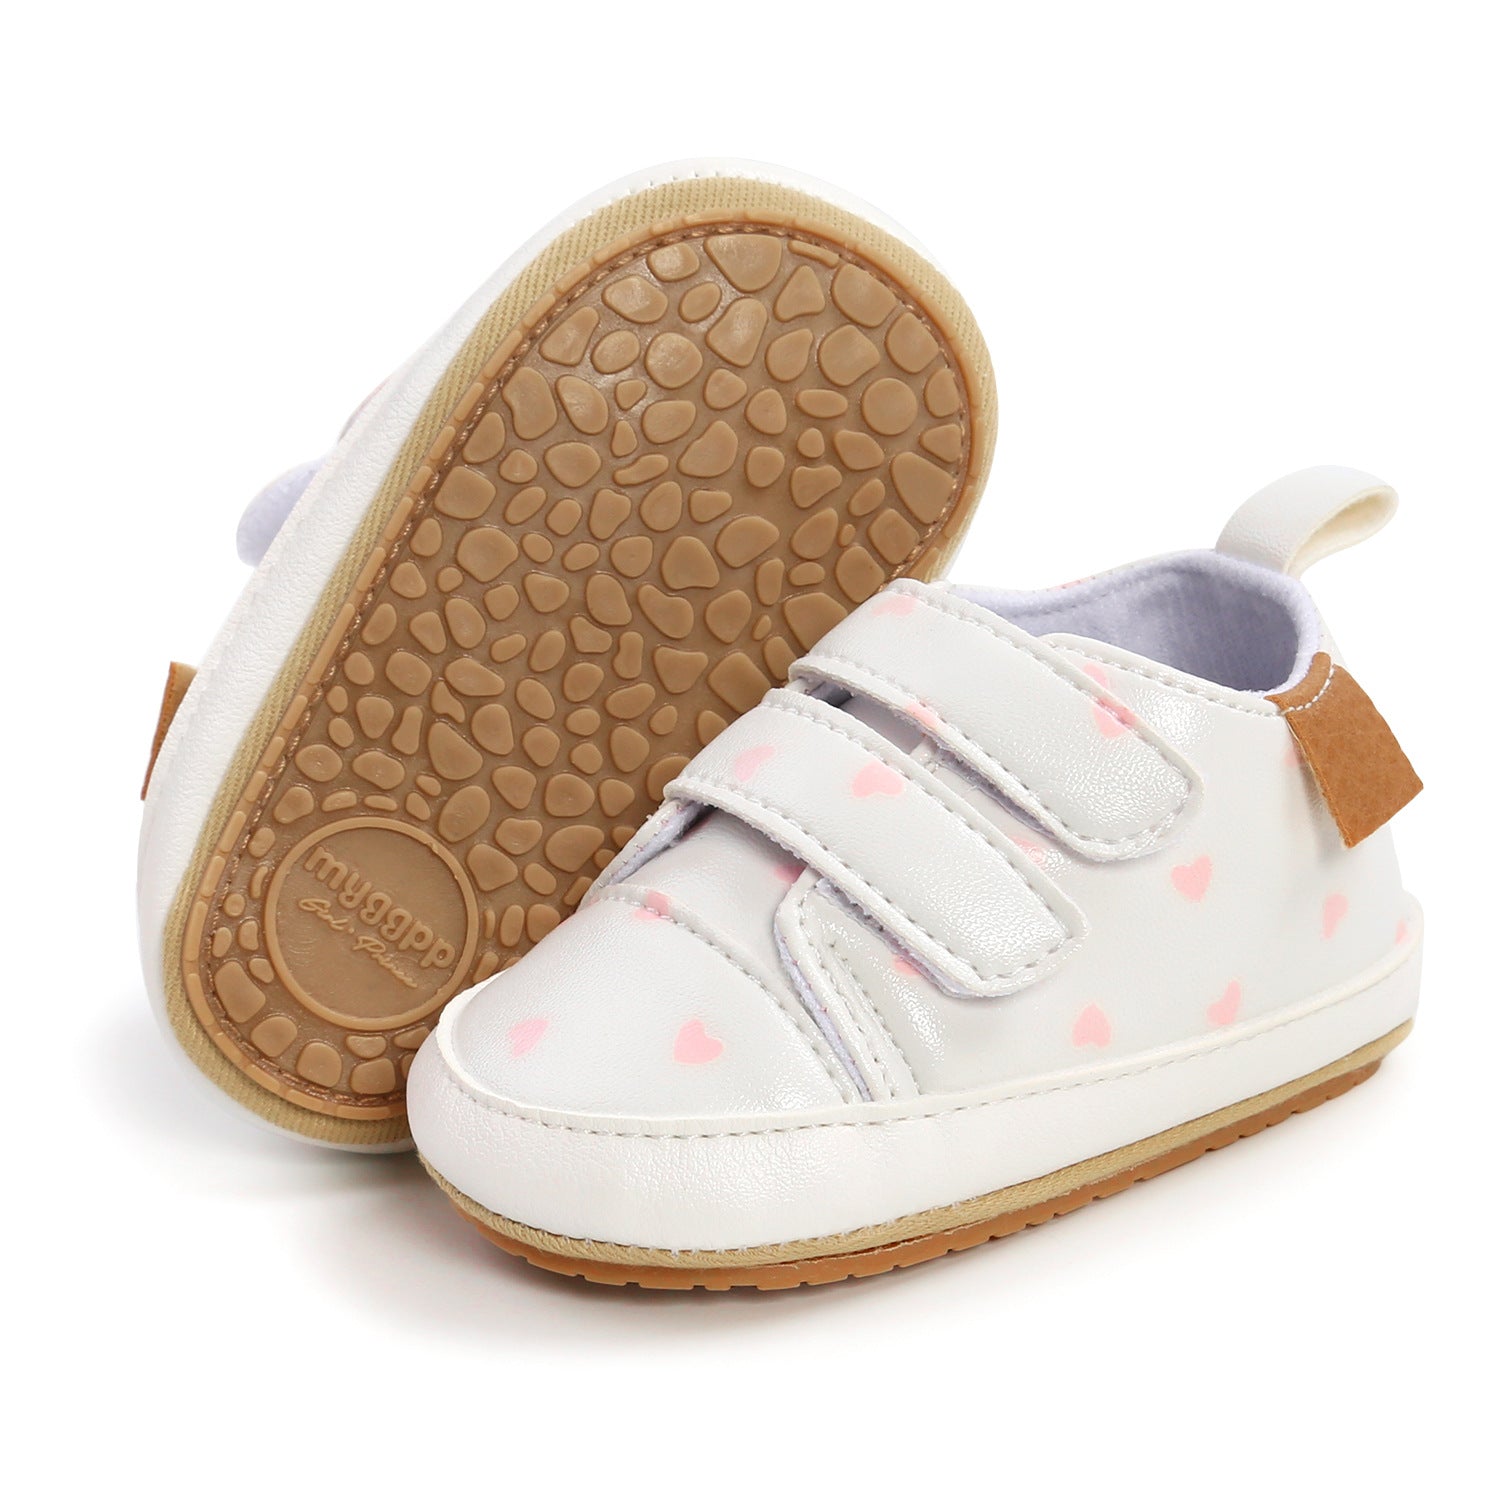 Kids Baby Boys Girls Sports Sneakers Walkers Shoes